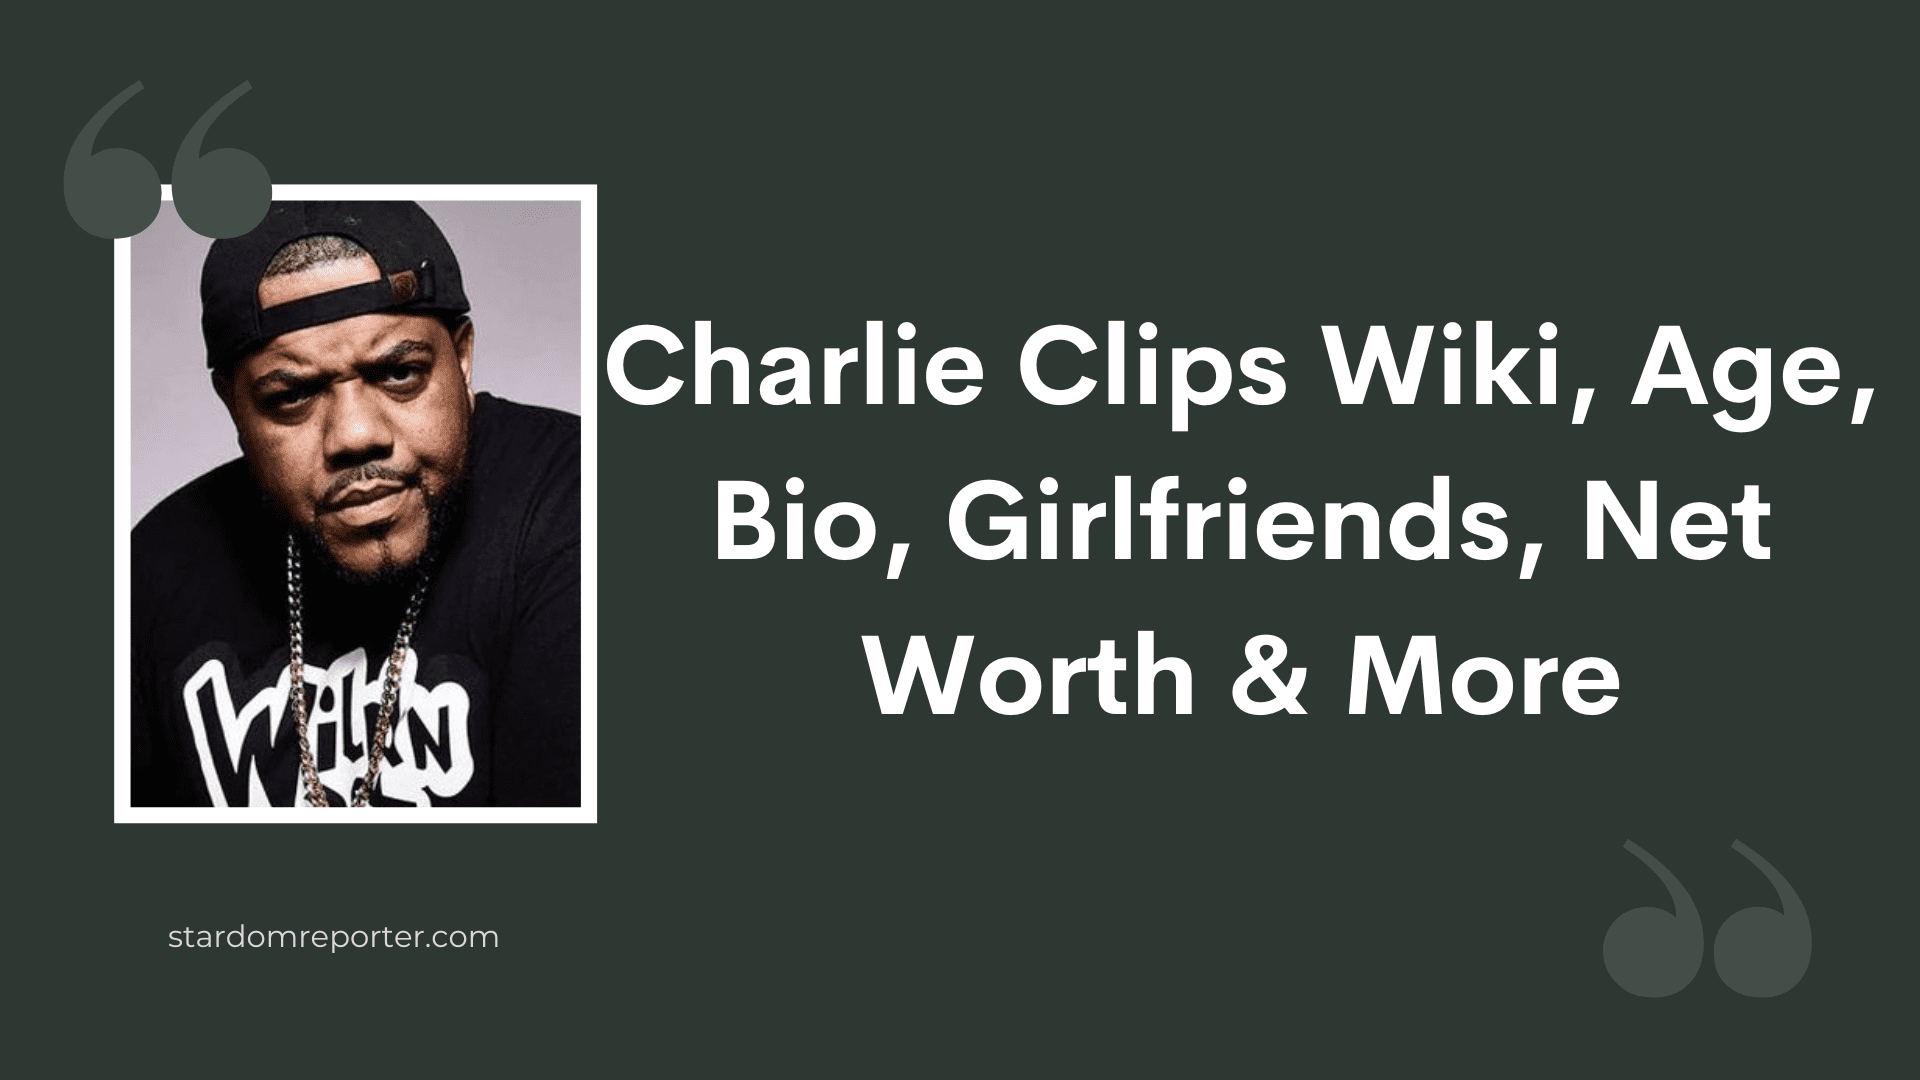 Charlie Clips Wiki, Age, Bio, Girlfriends, Net Worth & More - 21